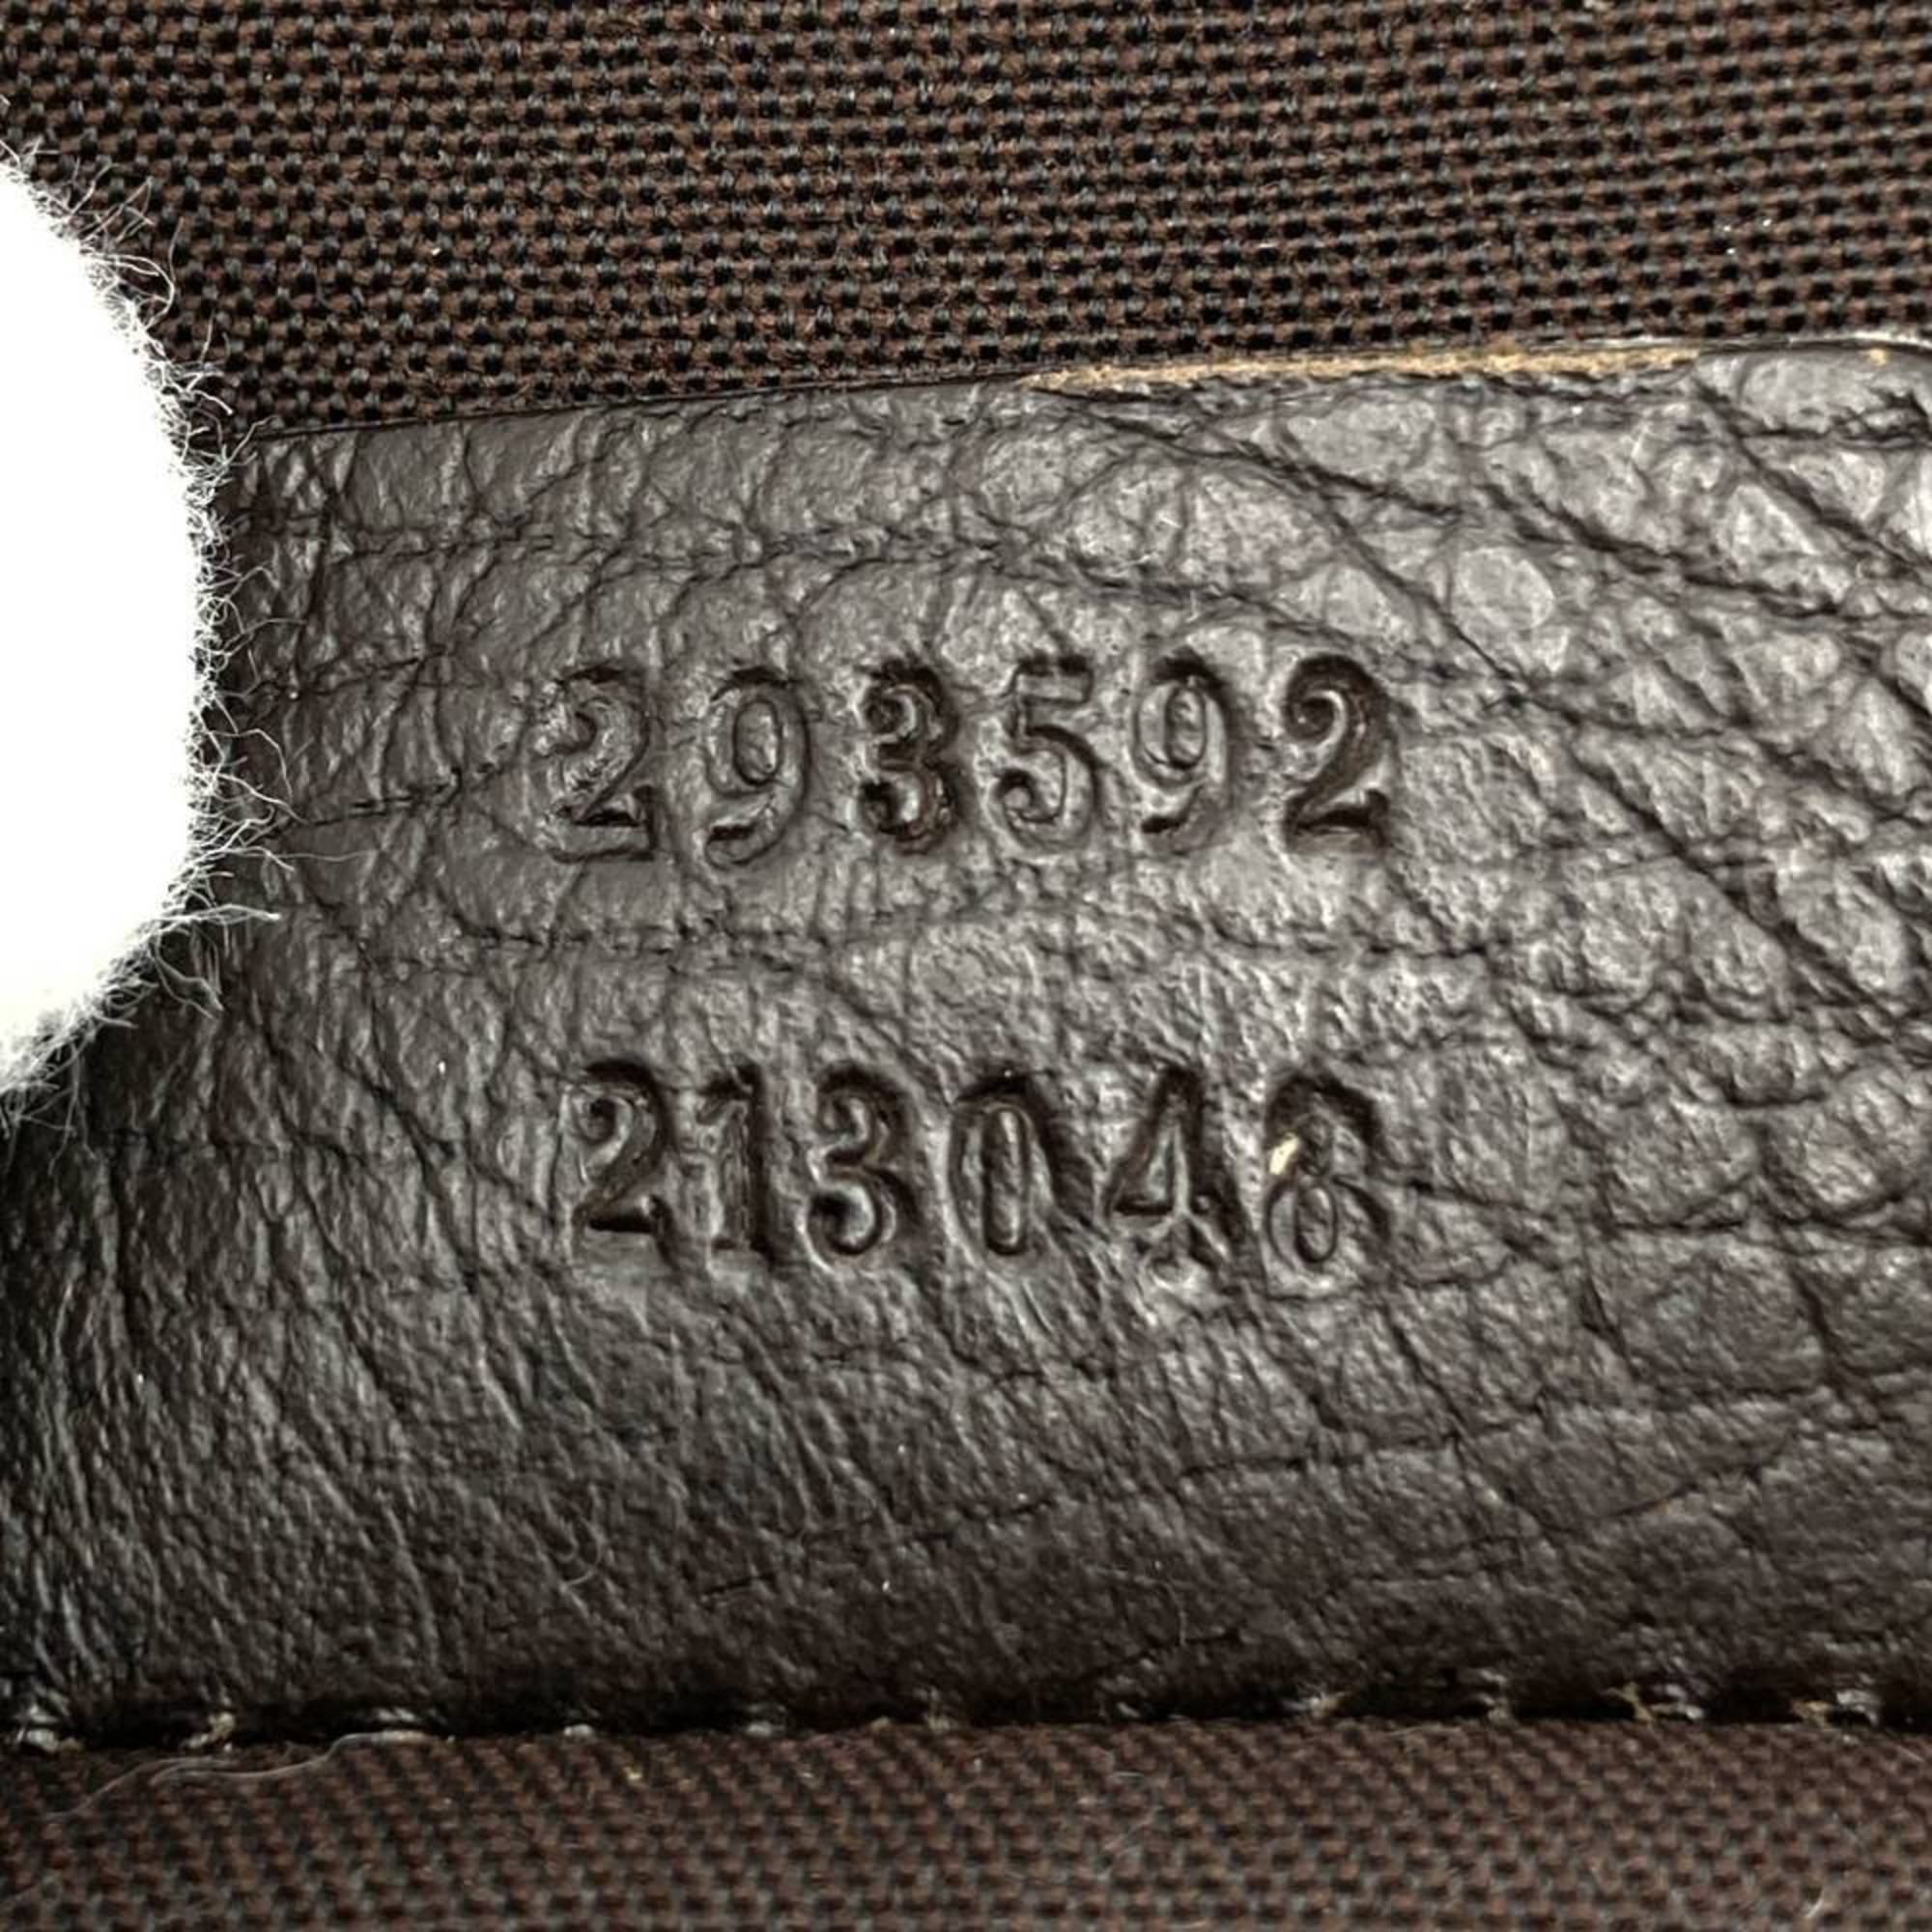 Gucci Tote Bag Handbag Sherry Line Dark Brown GG Nylon Women's 293592 GUCCI